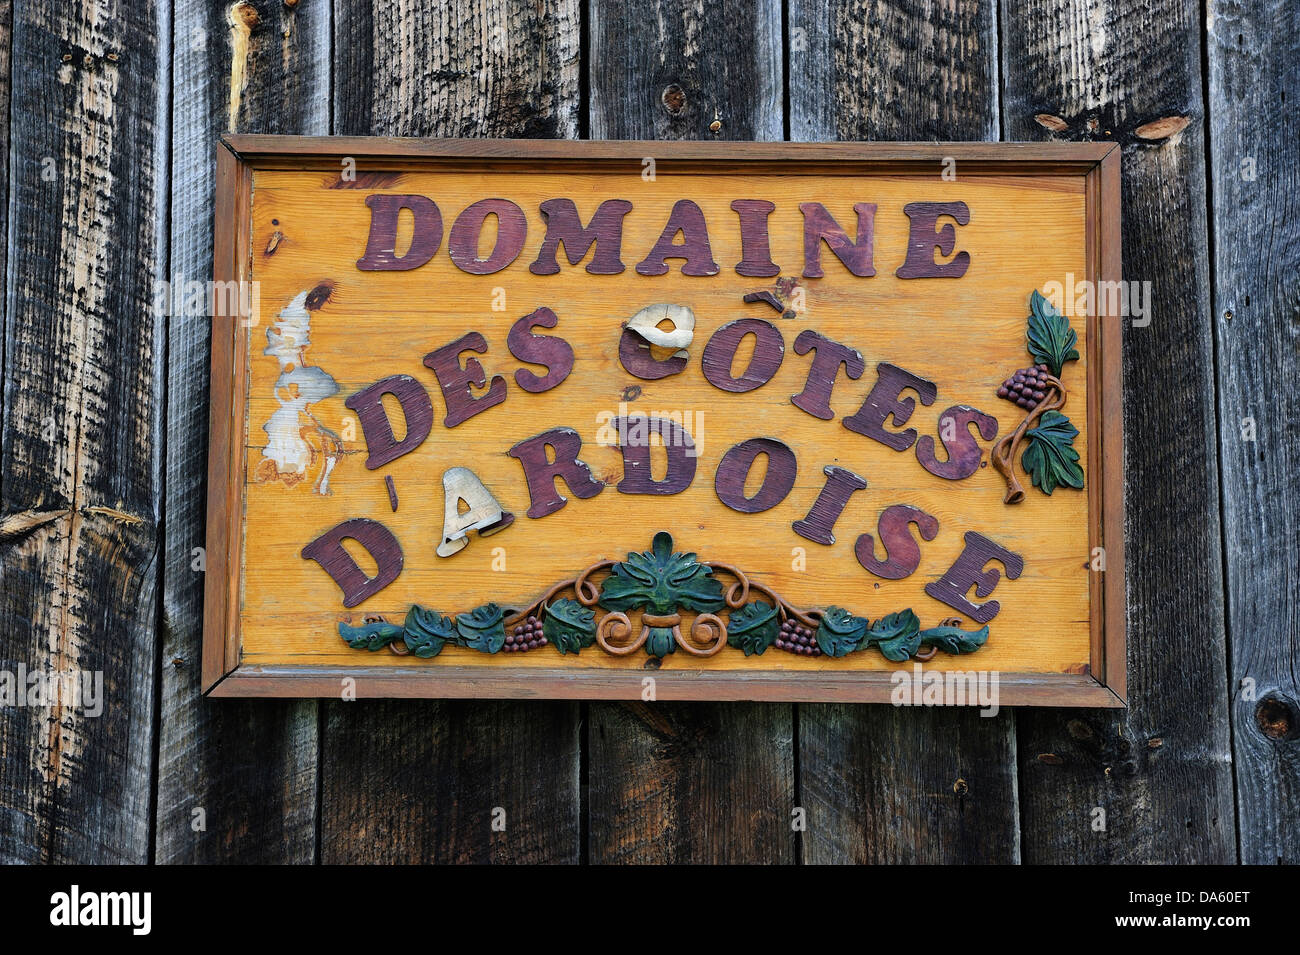 Canada, Eastern Townships, Wine Route, Quebec, Dunham, Vineyards, domaine des cotes d'Ardoise, sign, grapes, vine, wine, wood Stock Photo